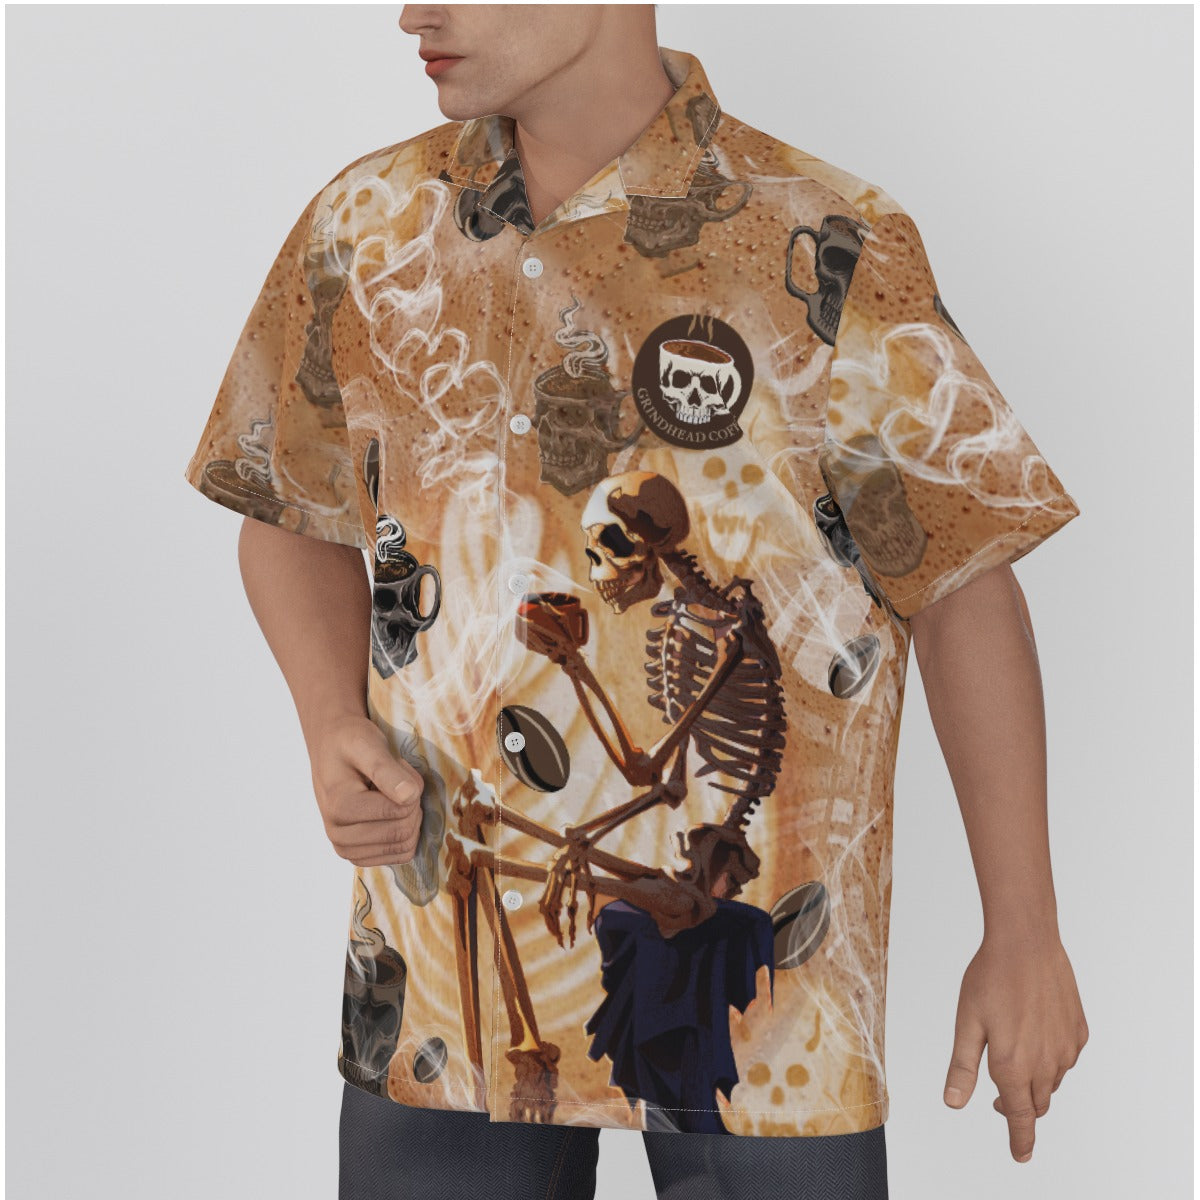 Grindhead Men's Hawaiian Shirt With Button Closure - Free Shipping